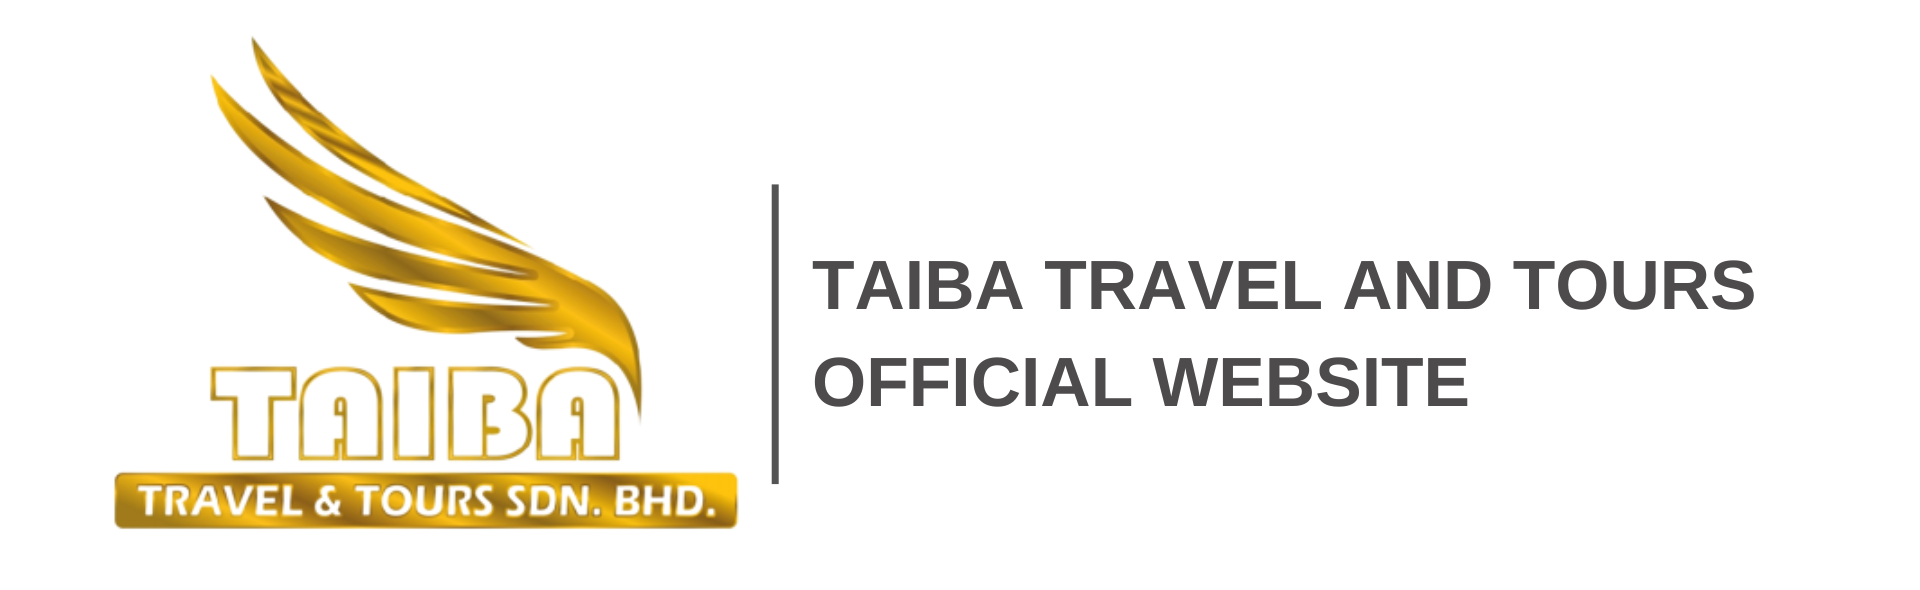 taiba travel & tours sdn bhd